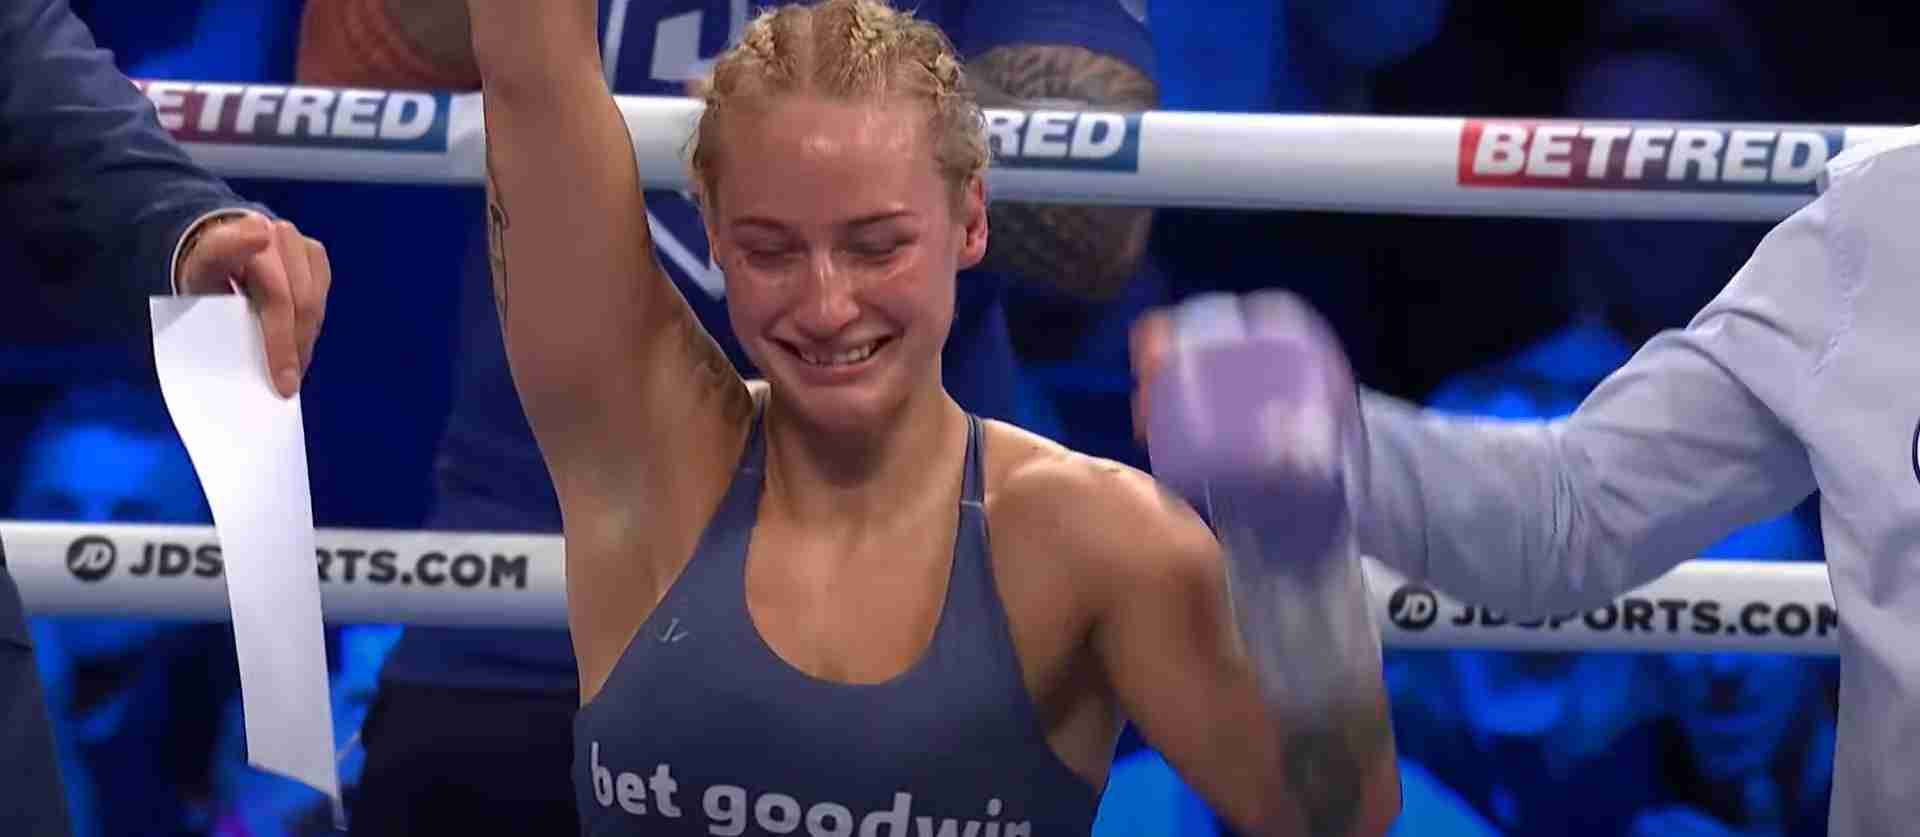 Blonde Bombshell Wins The World Title